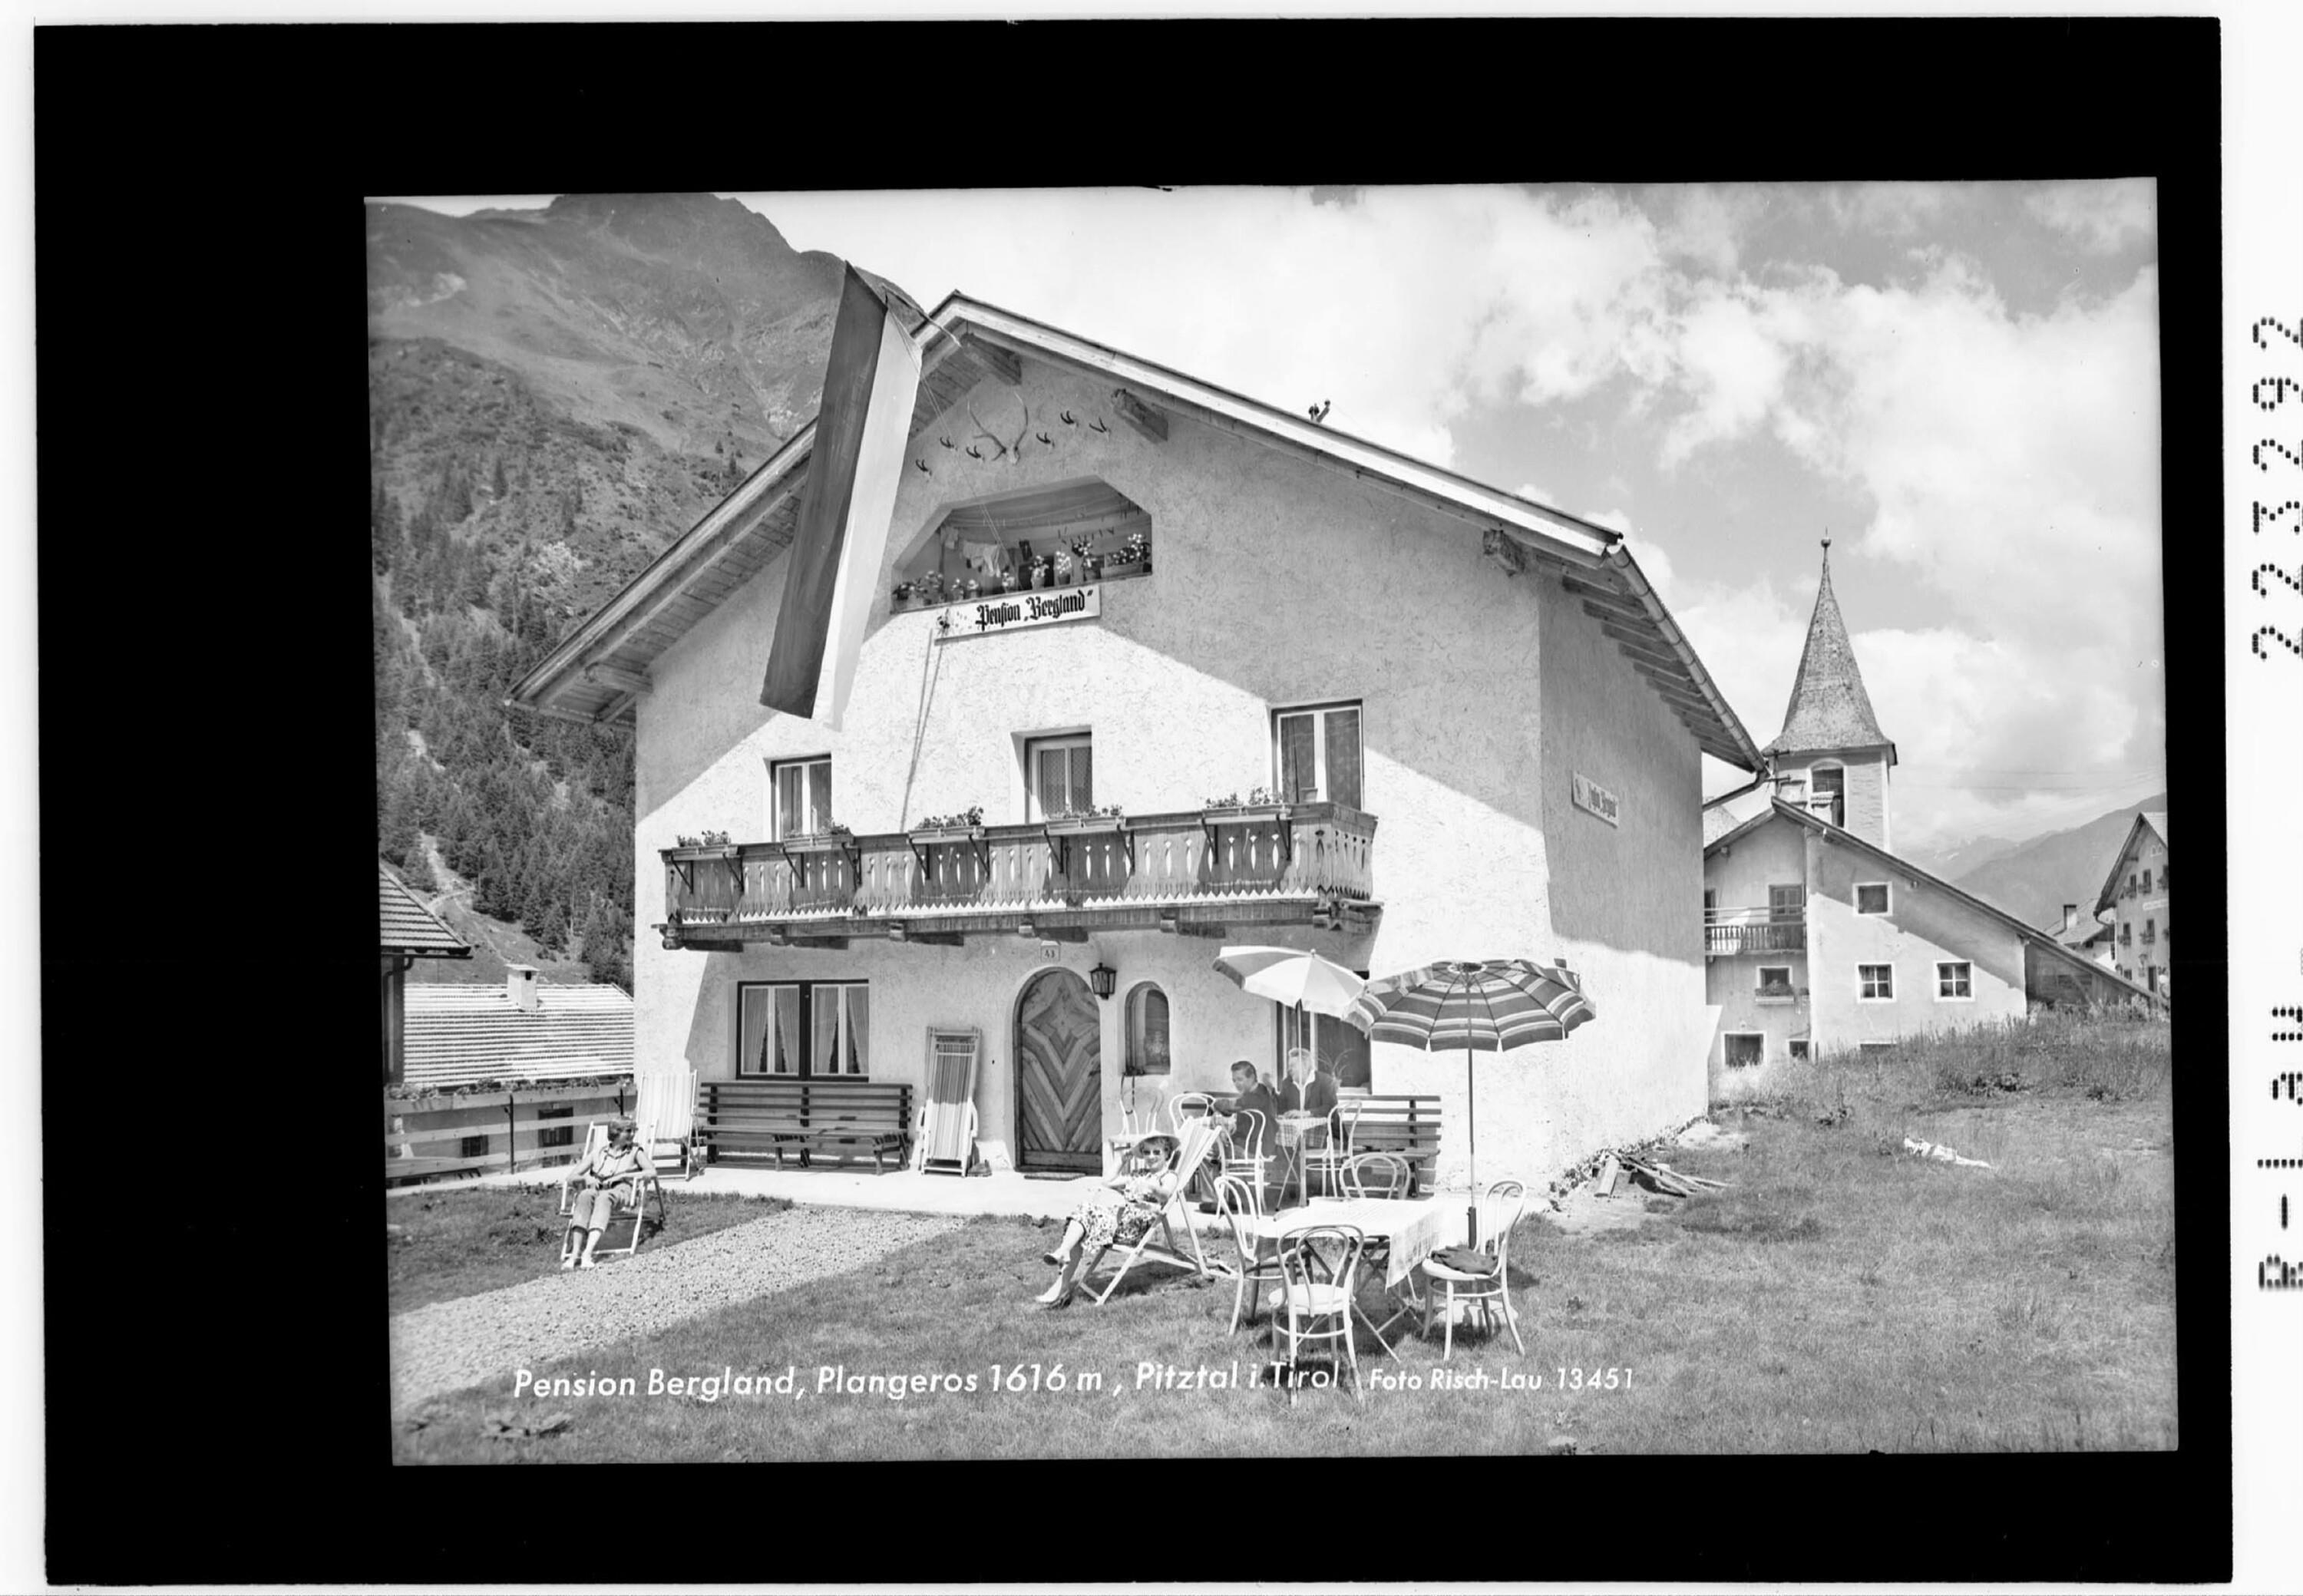 Pension Bergland / Plageross 1616 m / Pitztal in Tirol></div>


    <hr>
    <div class=